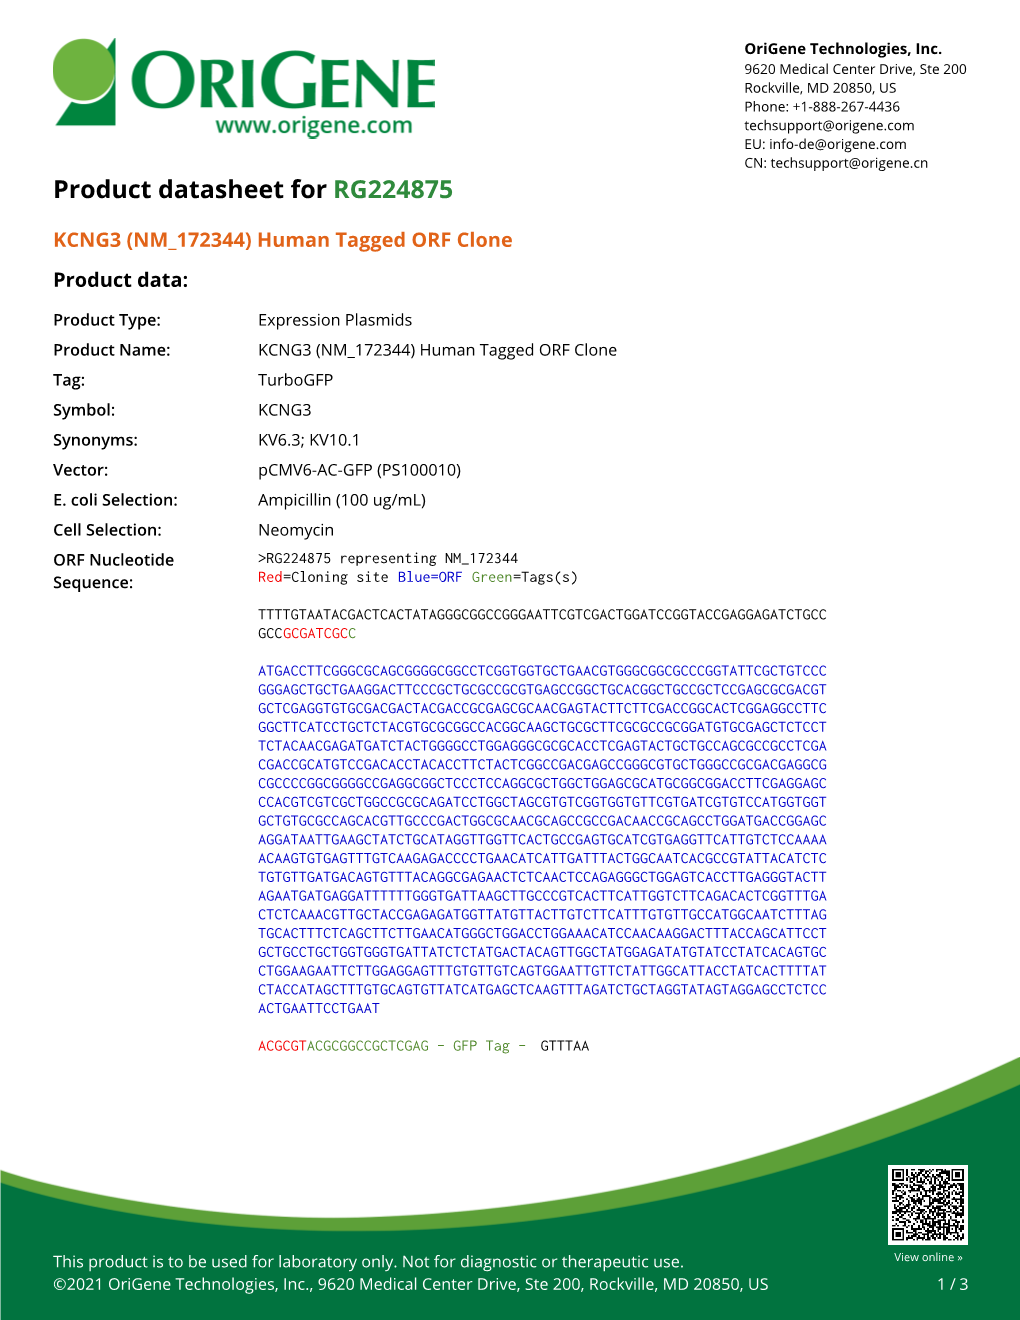 KCNG3 (NM 172344) Human Tagged ORF Clone – RG224875